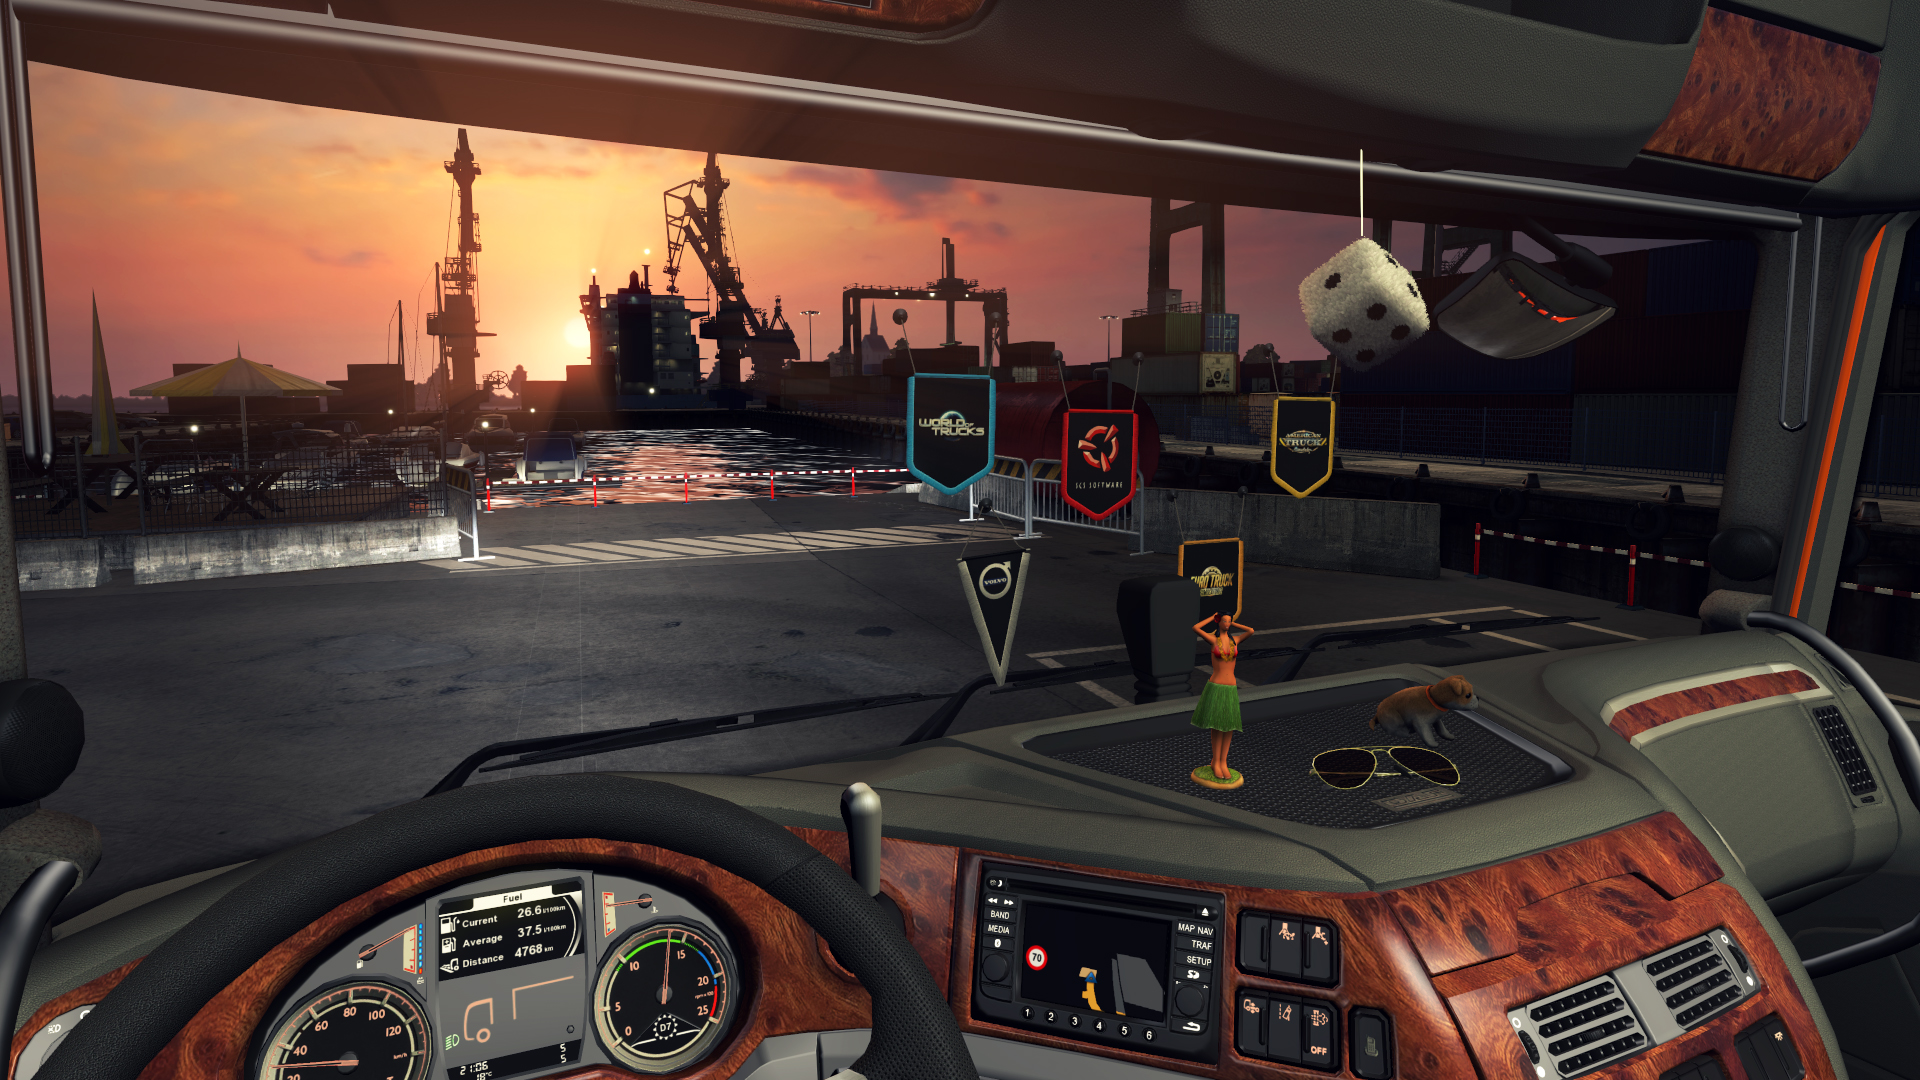 euro truck simulator free download full version pc windows 10